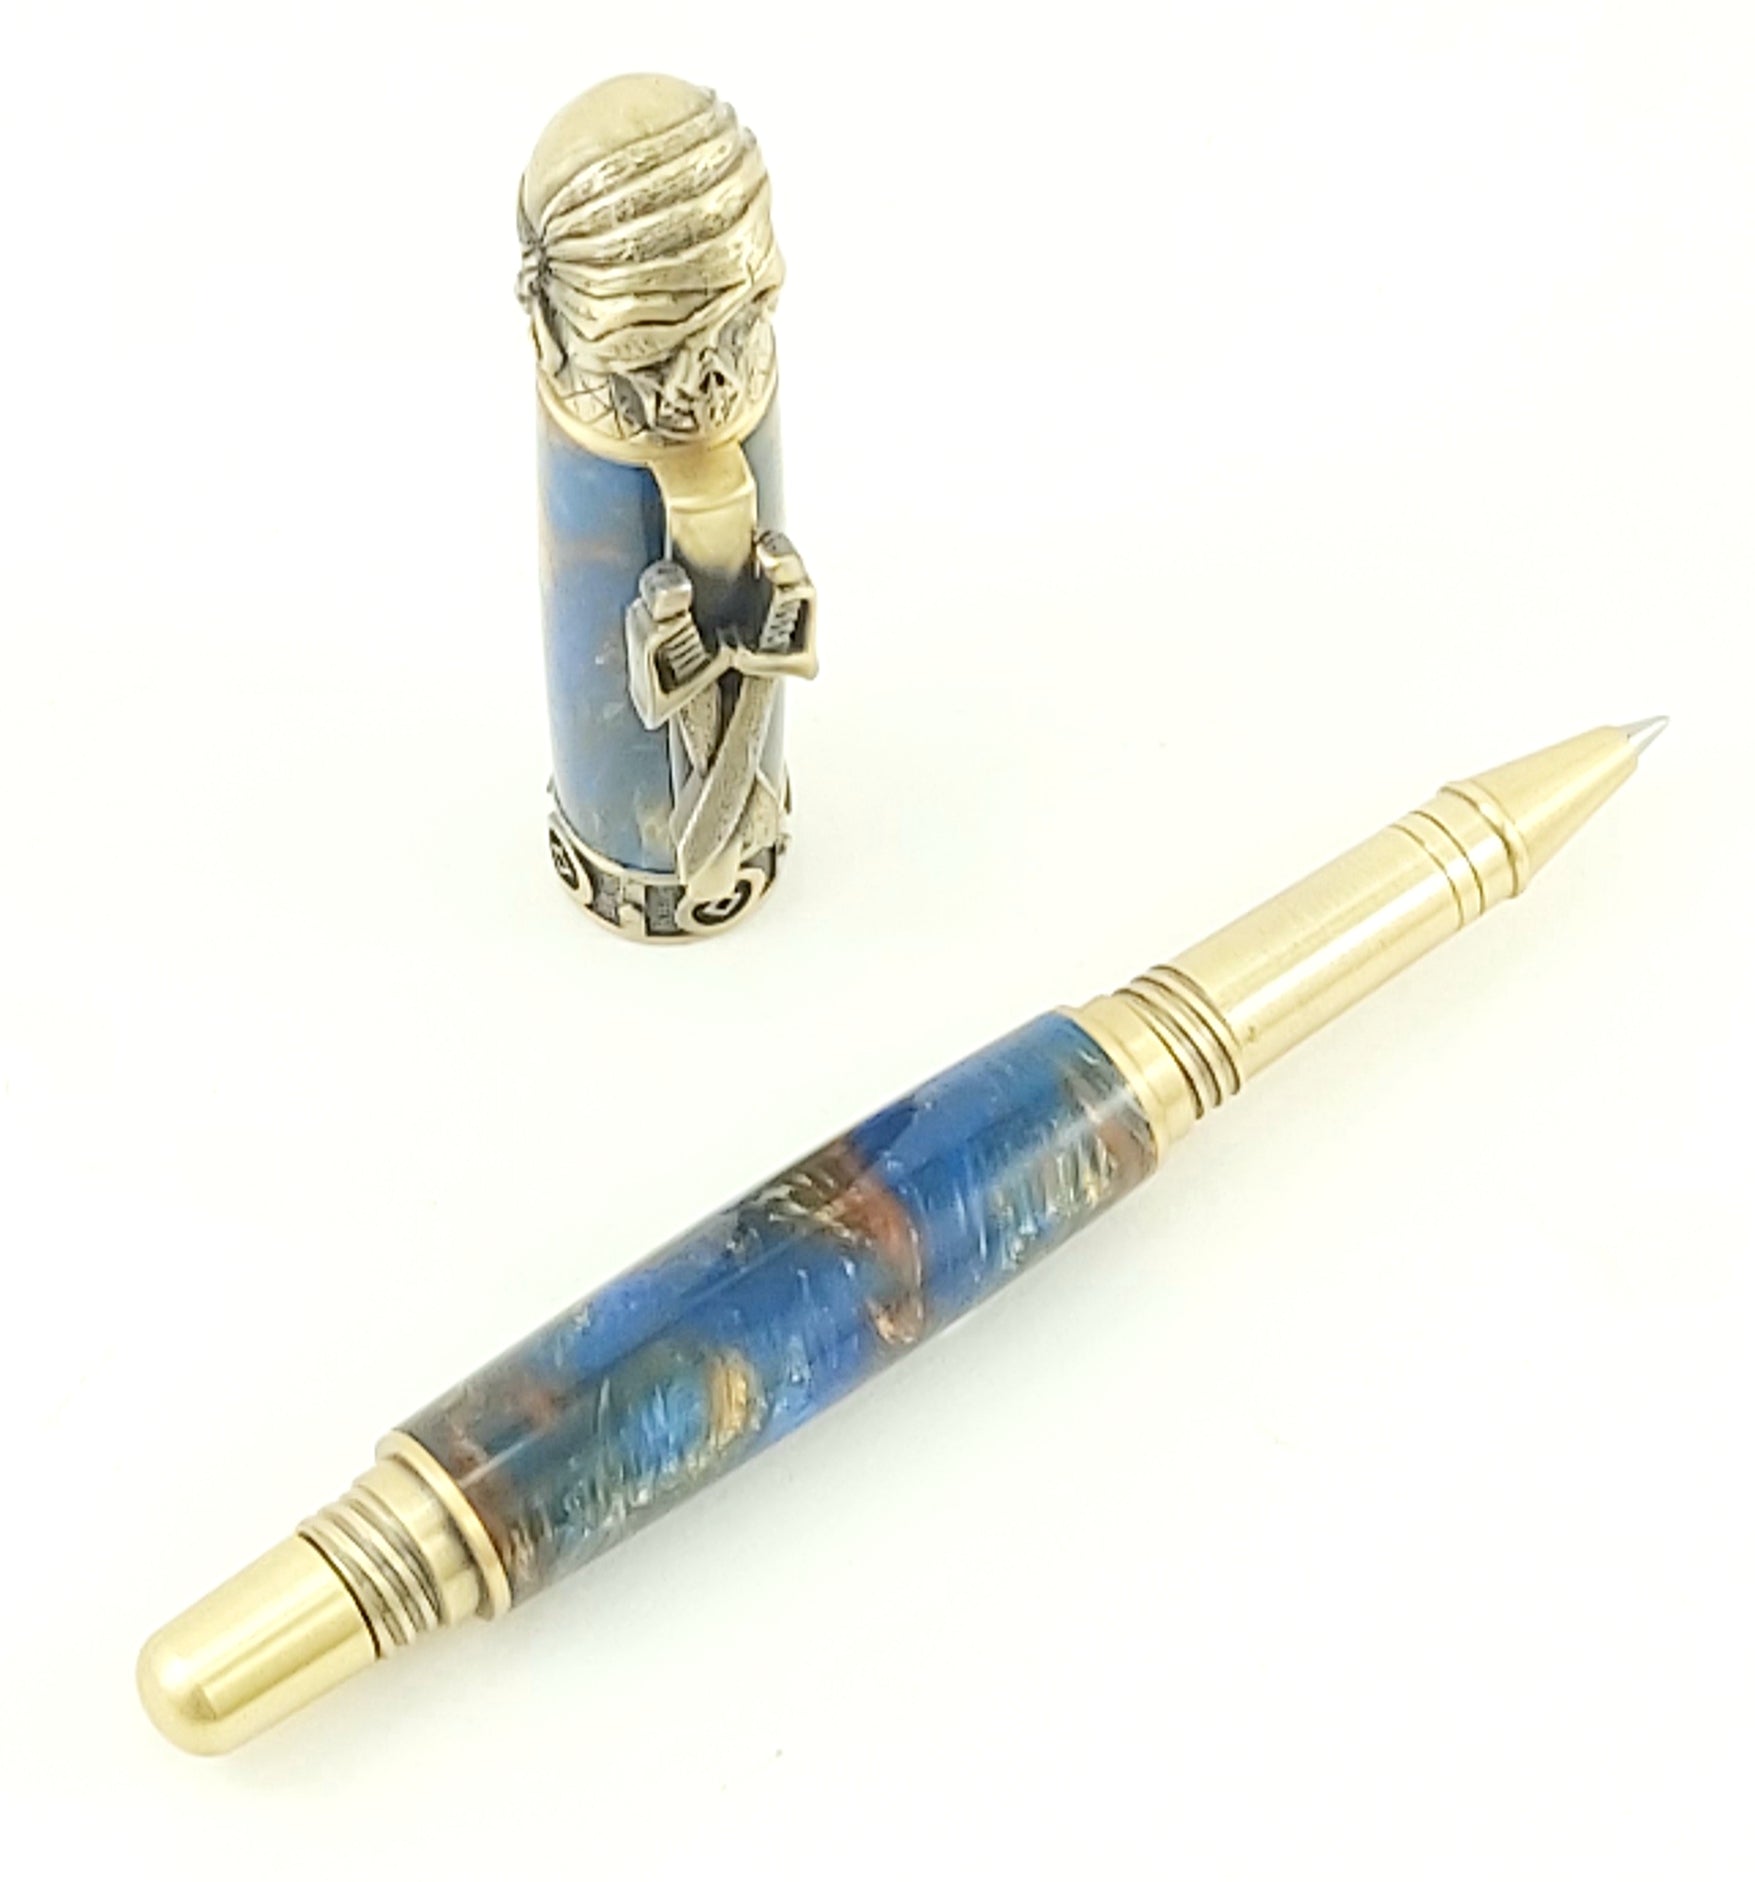 Pirate Pen - 2463 - Antique Brass with Sunken Treasure Acrylic